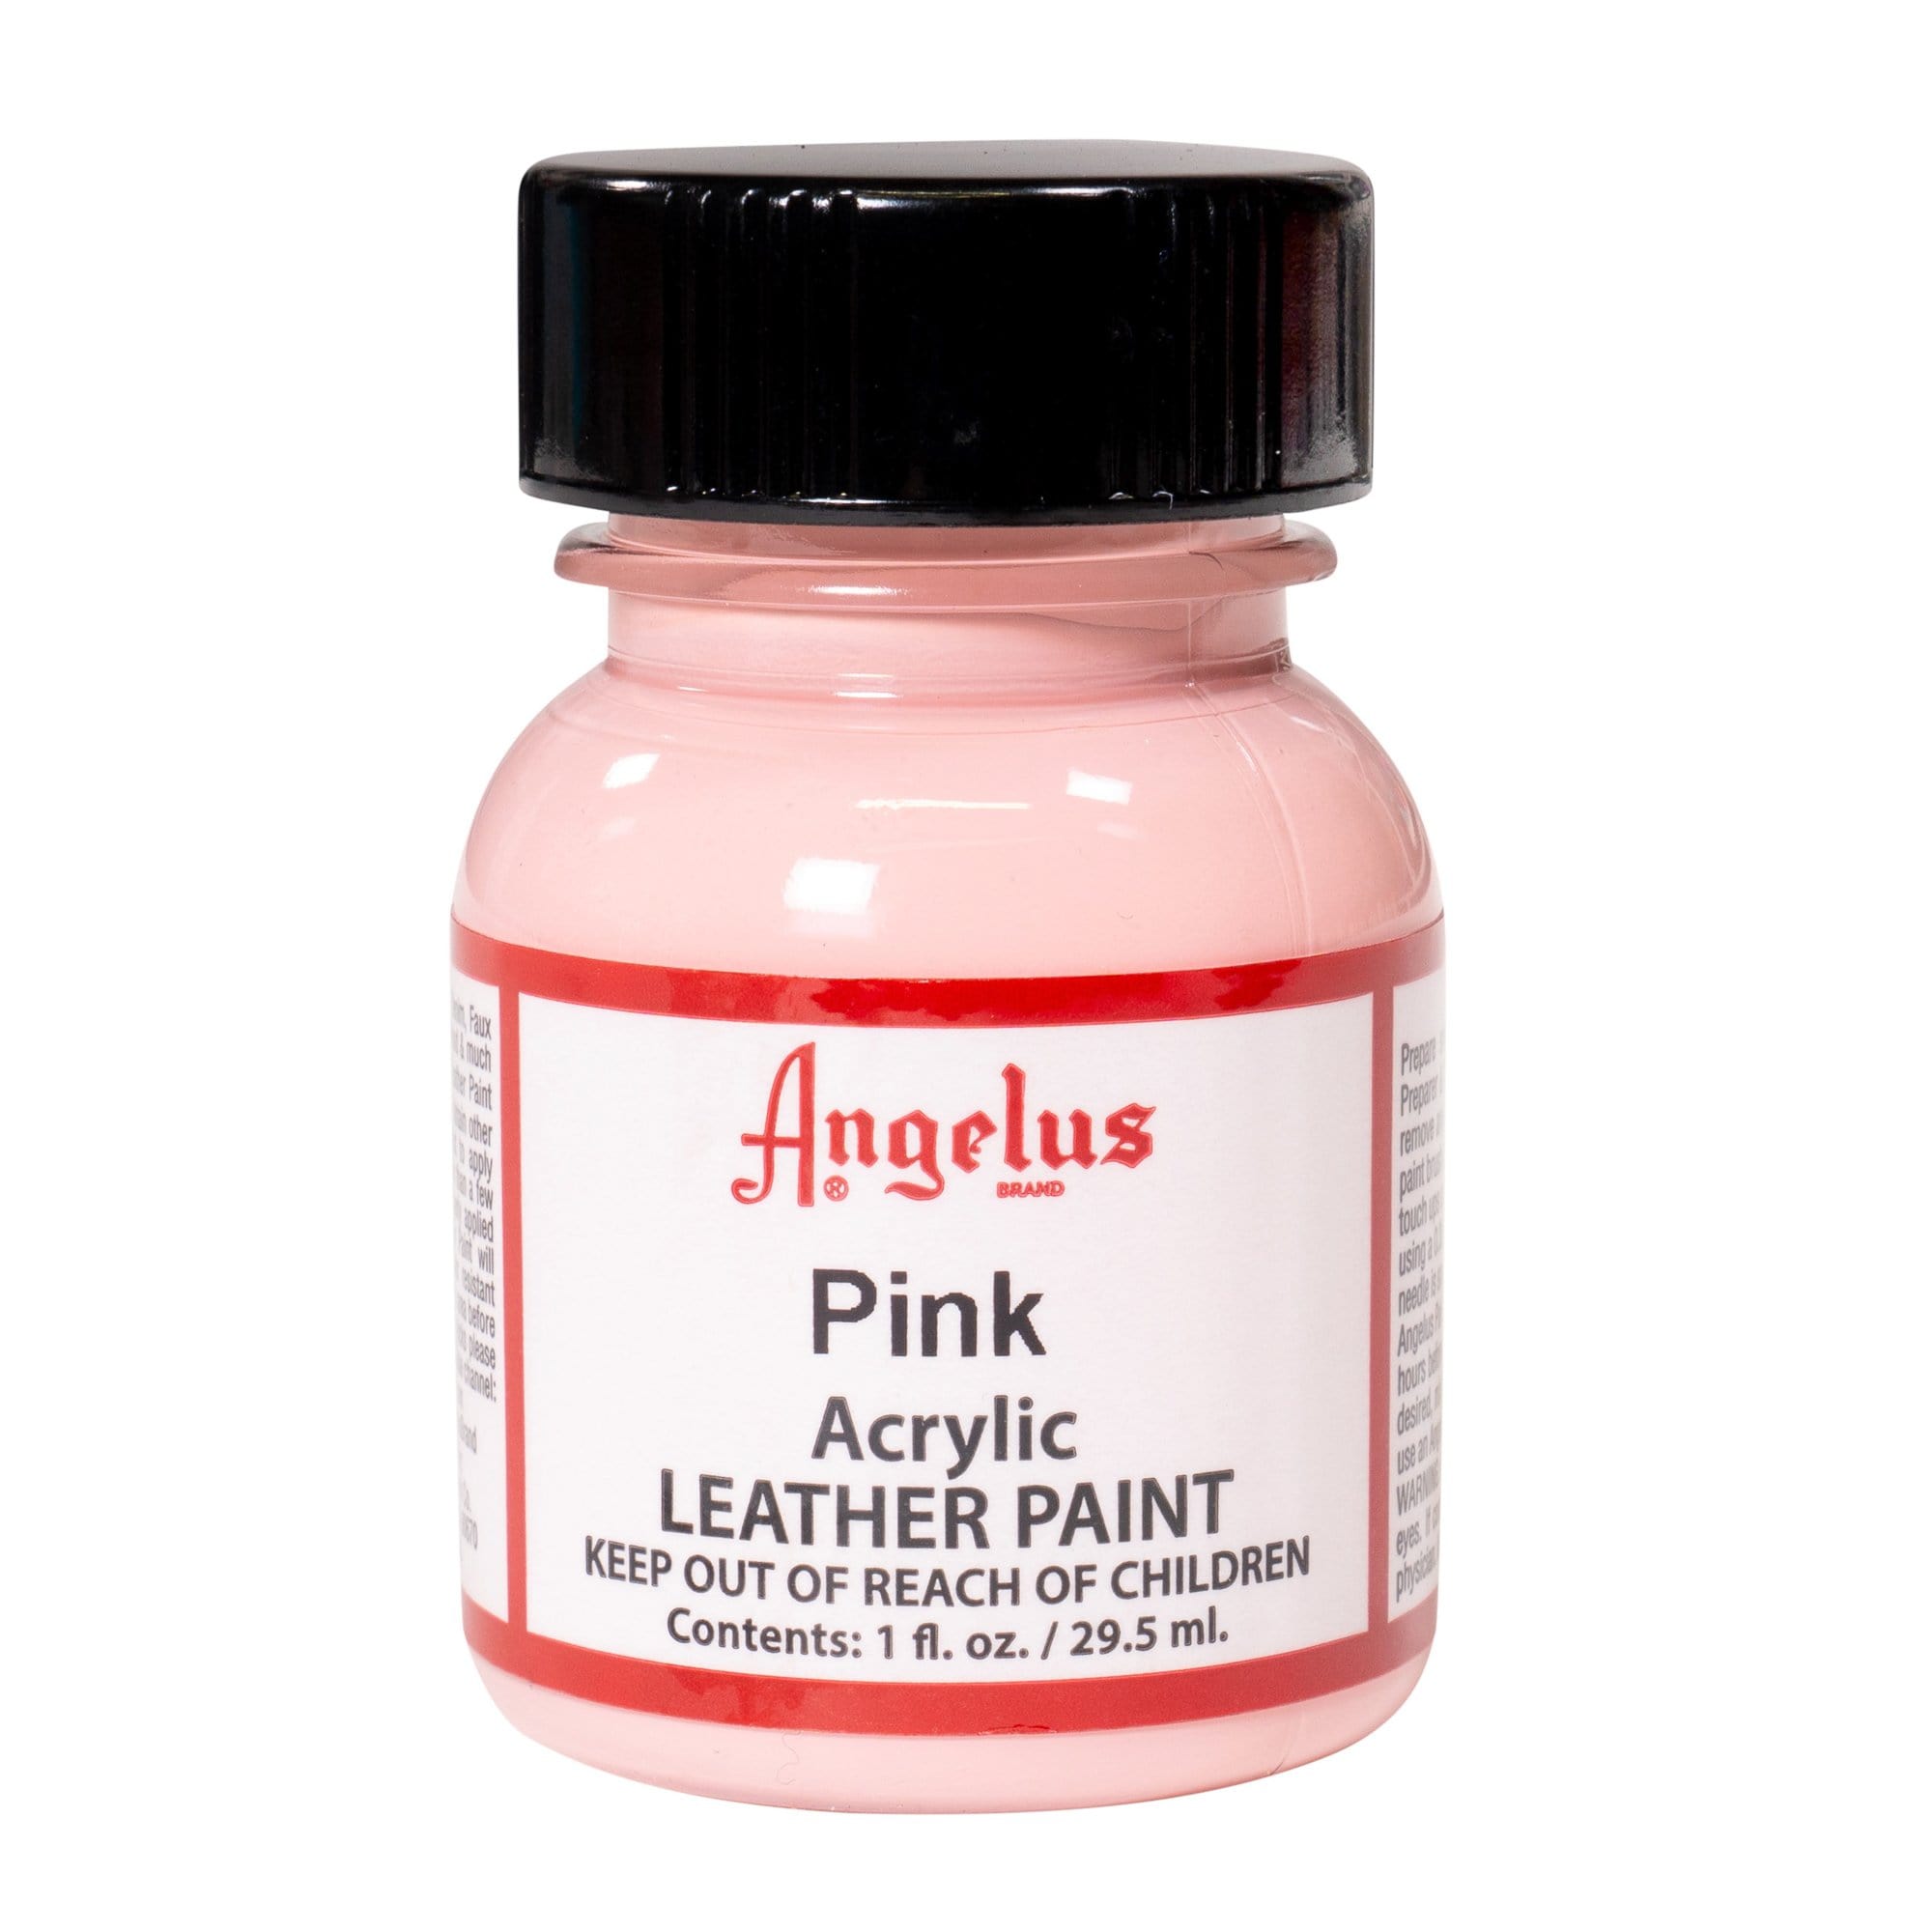 Angelus Acrylic Leather Paint - Pink, 1 oz